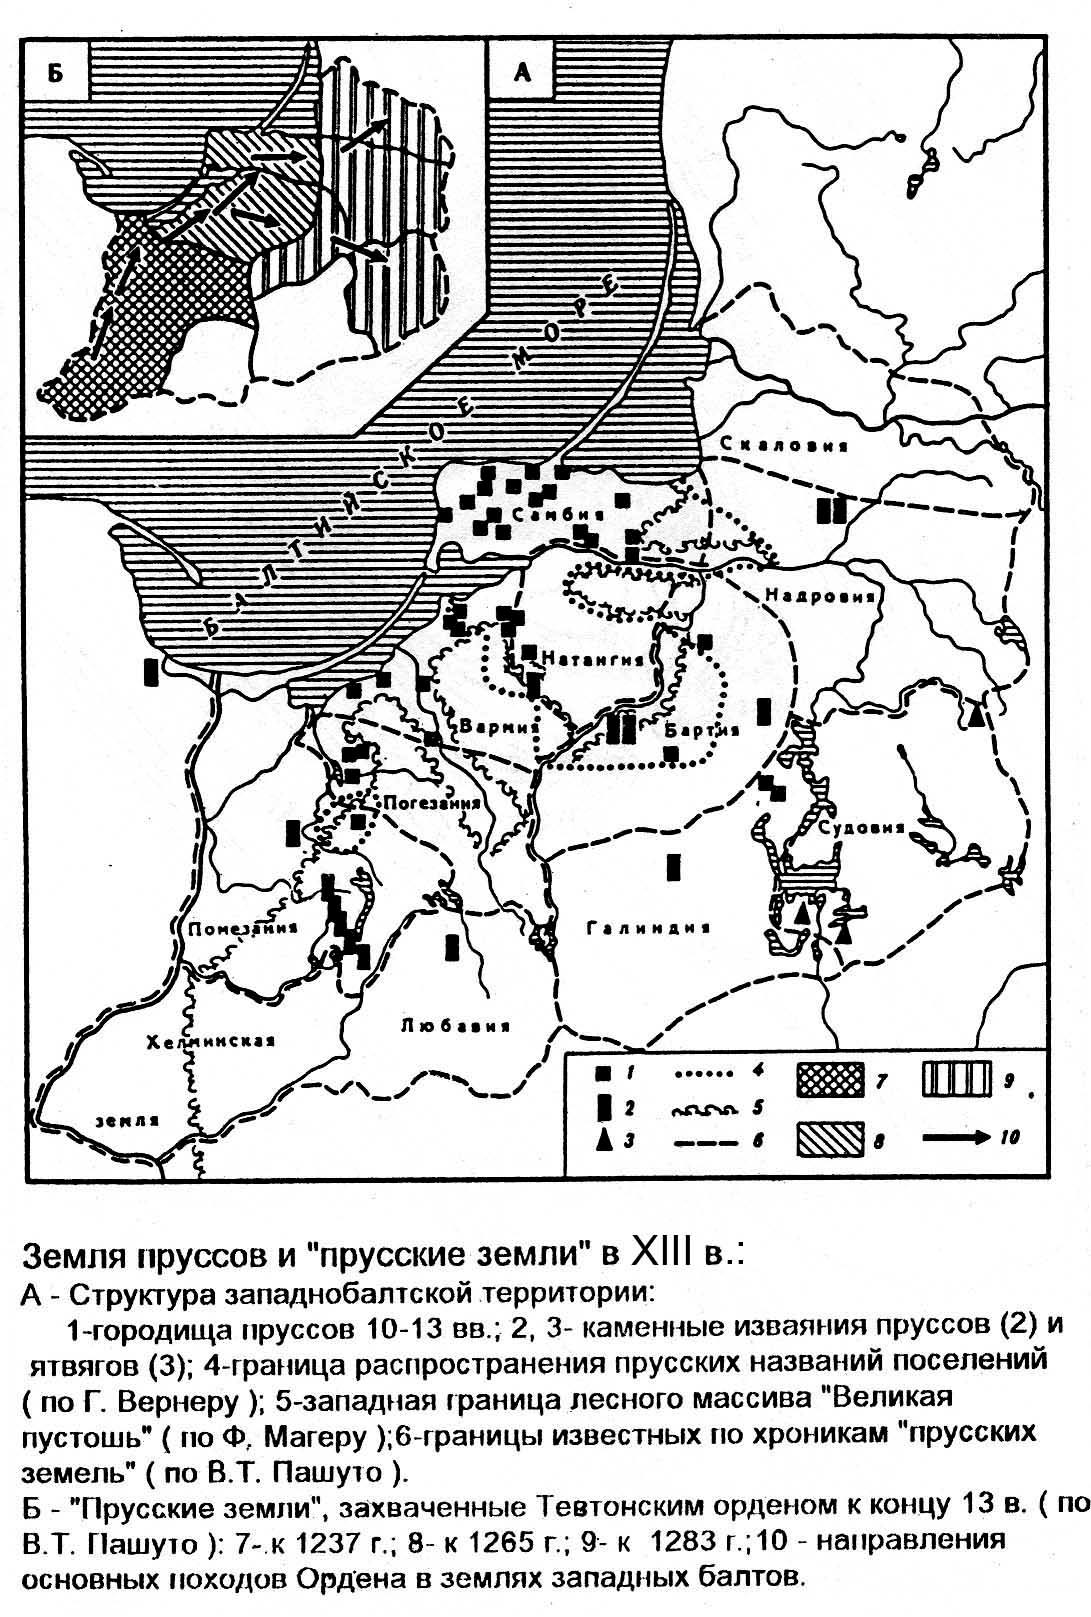 Прусские земли в 13 веке (по Владимиру Кулакову).jpg